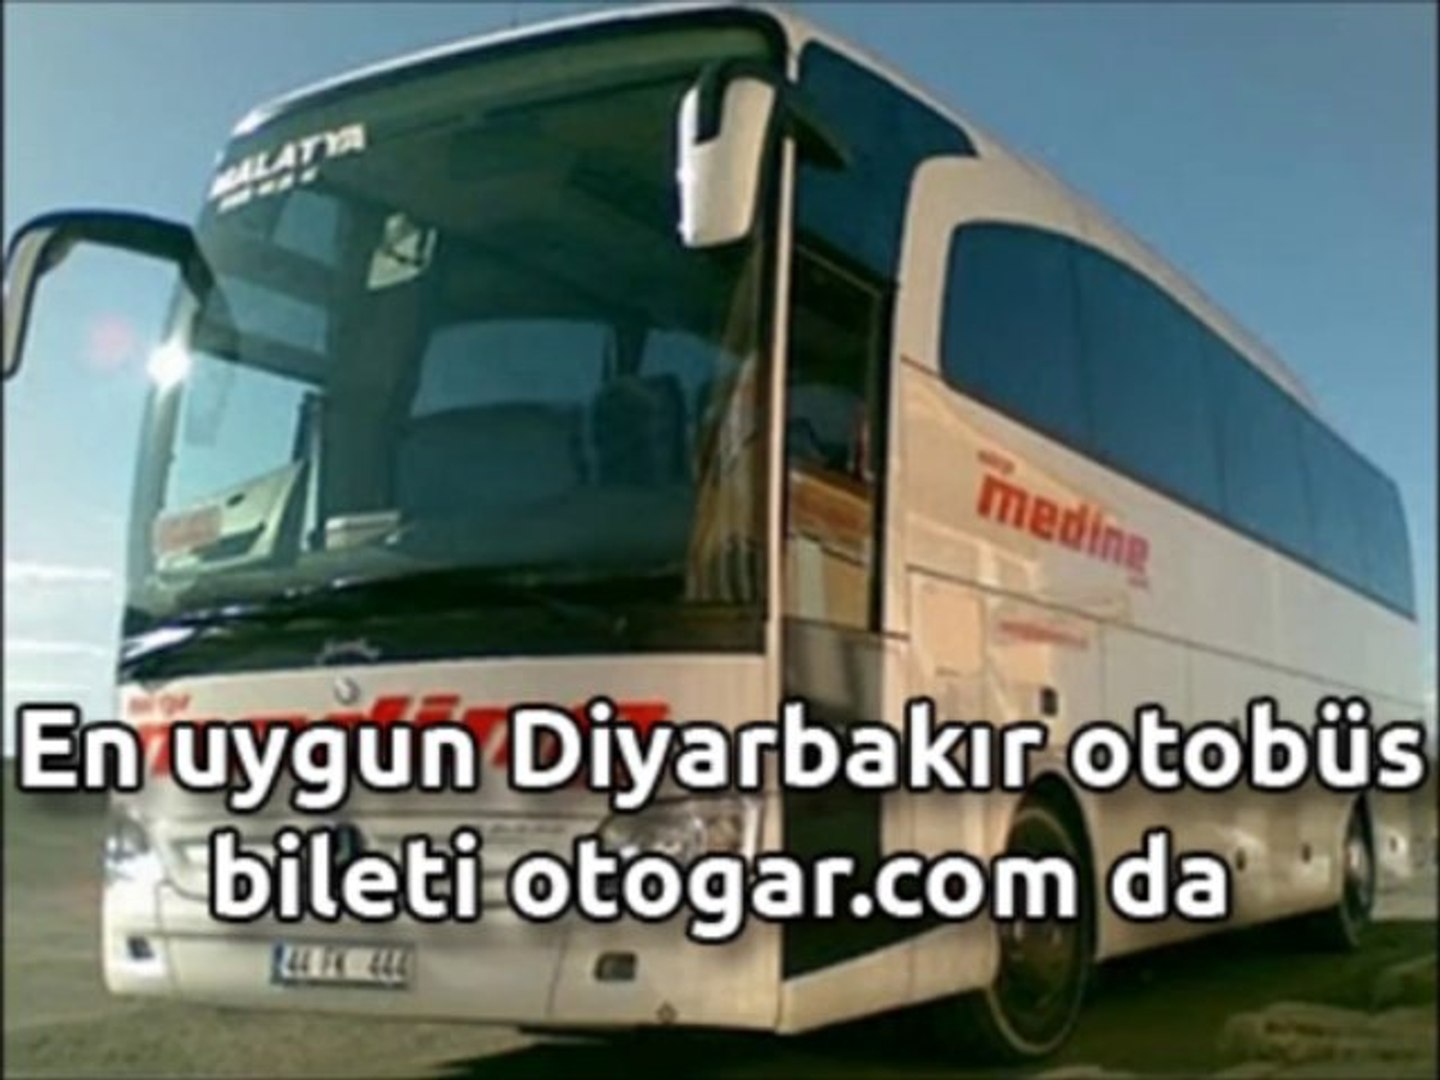 diyarbakir otobus bileti otogar com dailymotion video